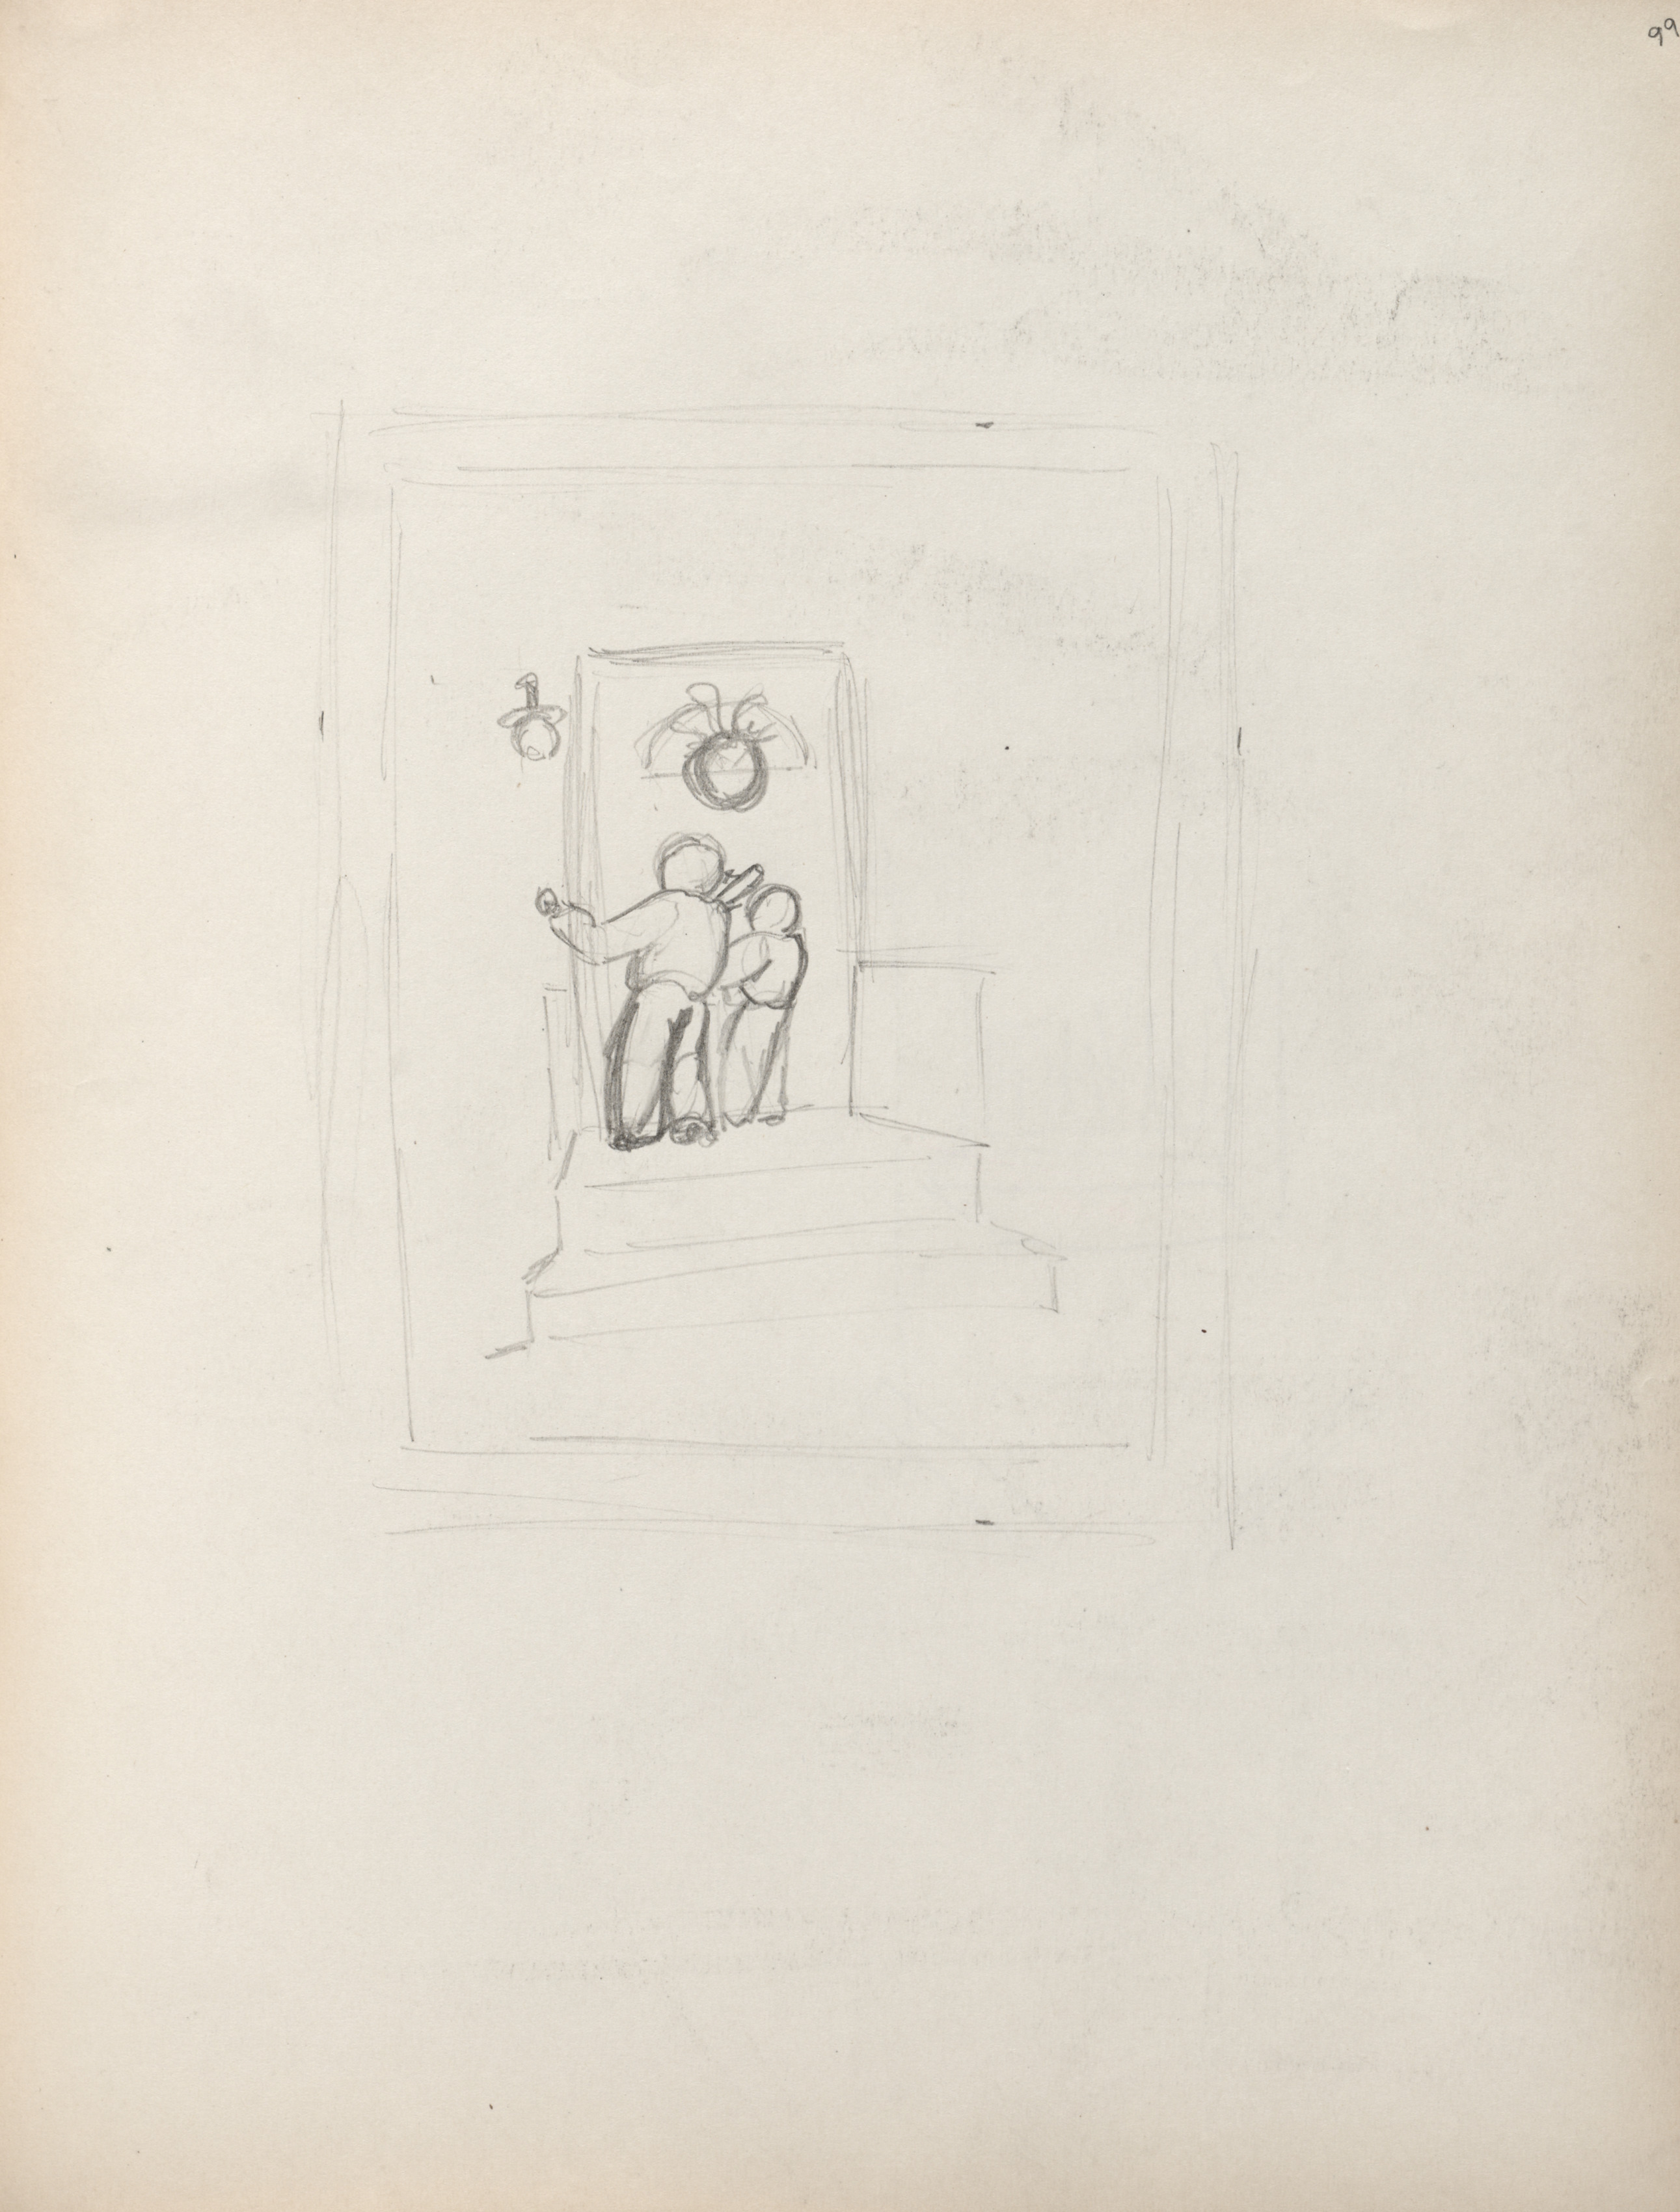 Sketchbook No. 2, page 66: Figures at a doorway